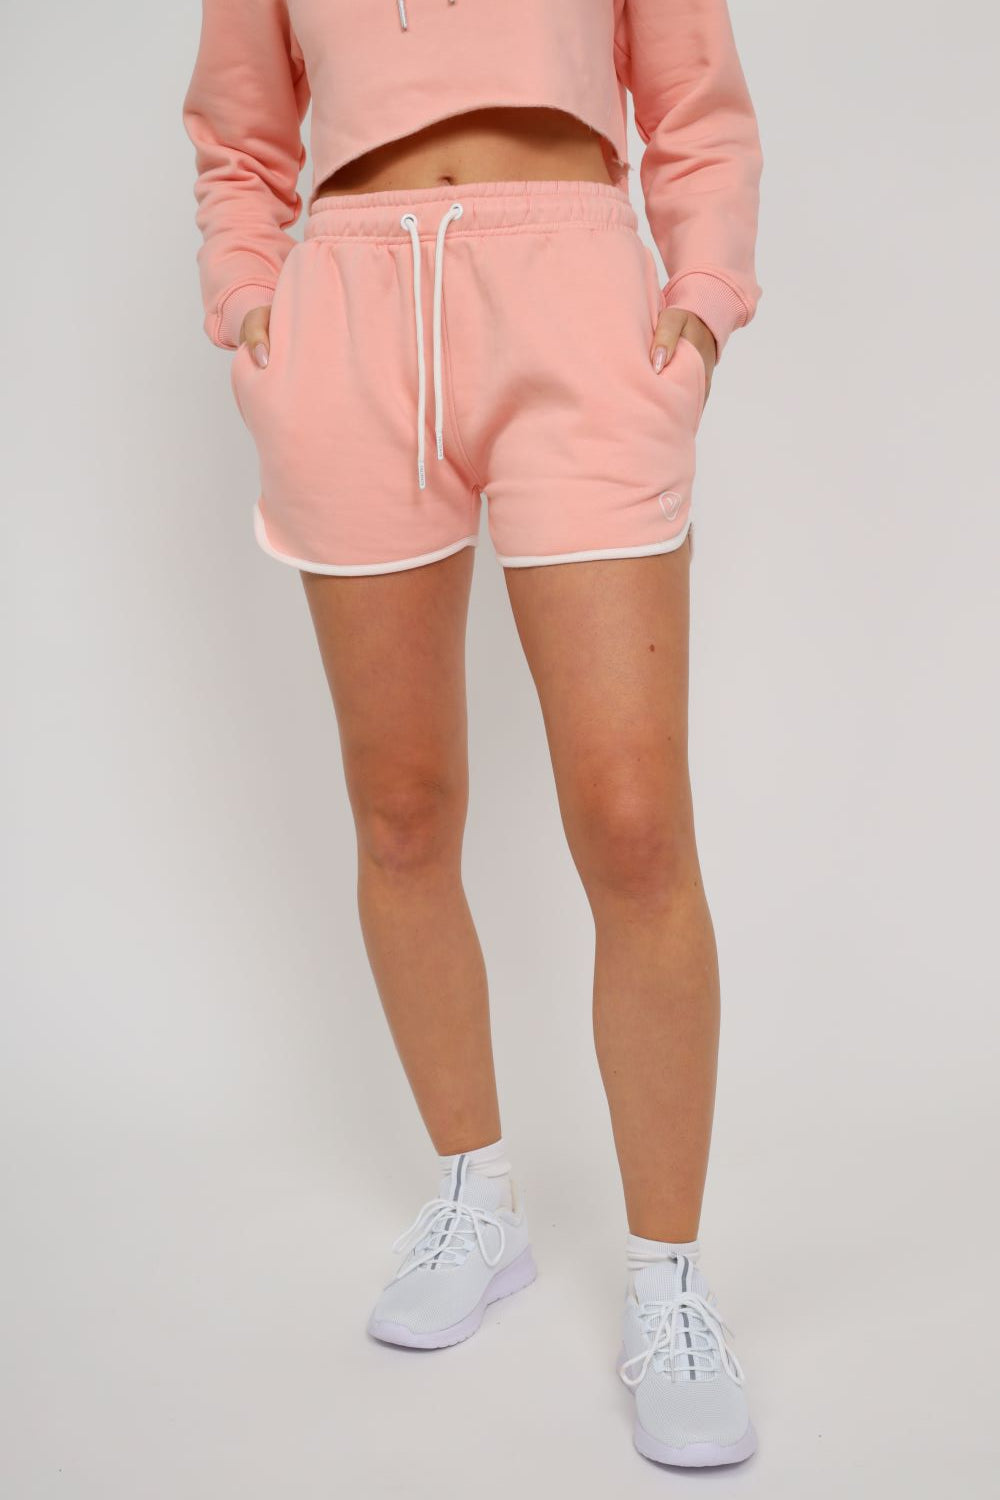 Validate Nyah Pink Shorts | Validate Fashion Women's Shorts | Hertfordshire